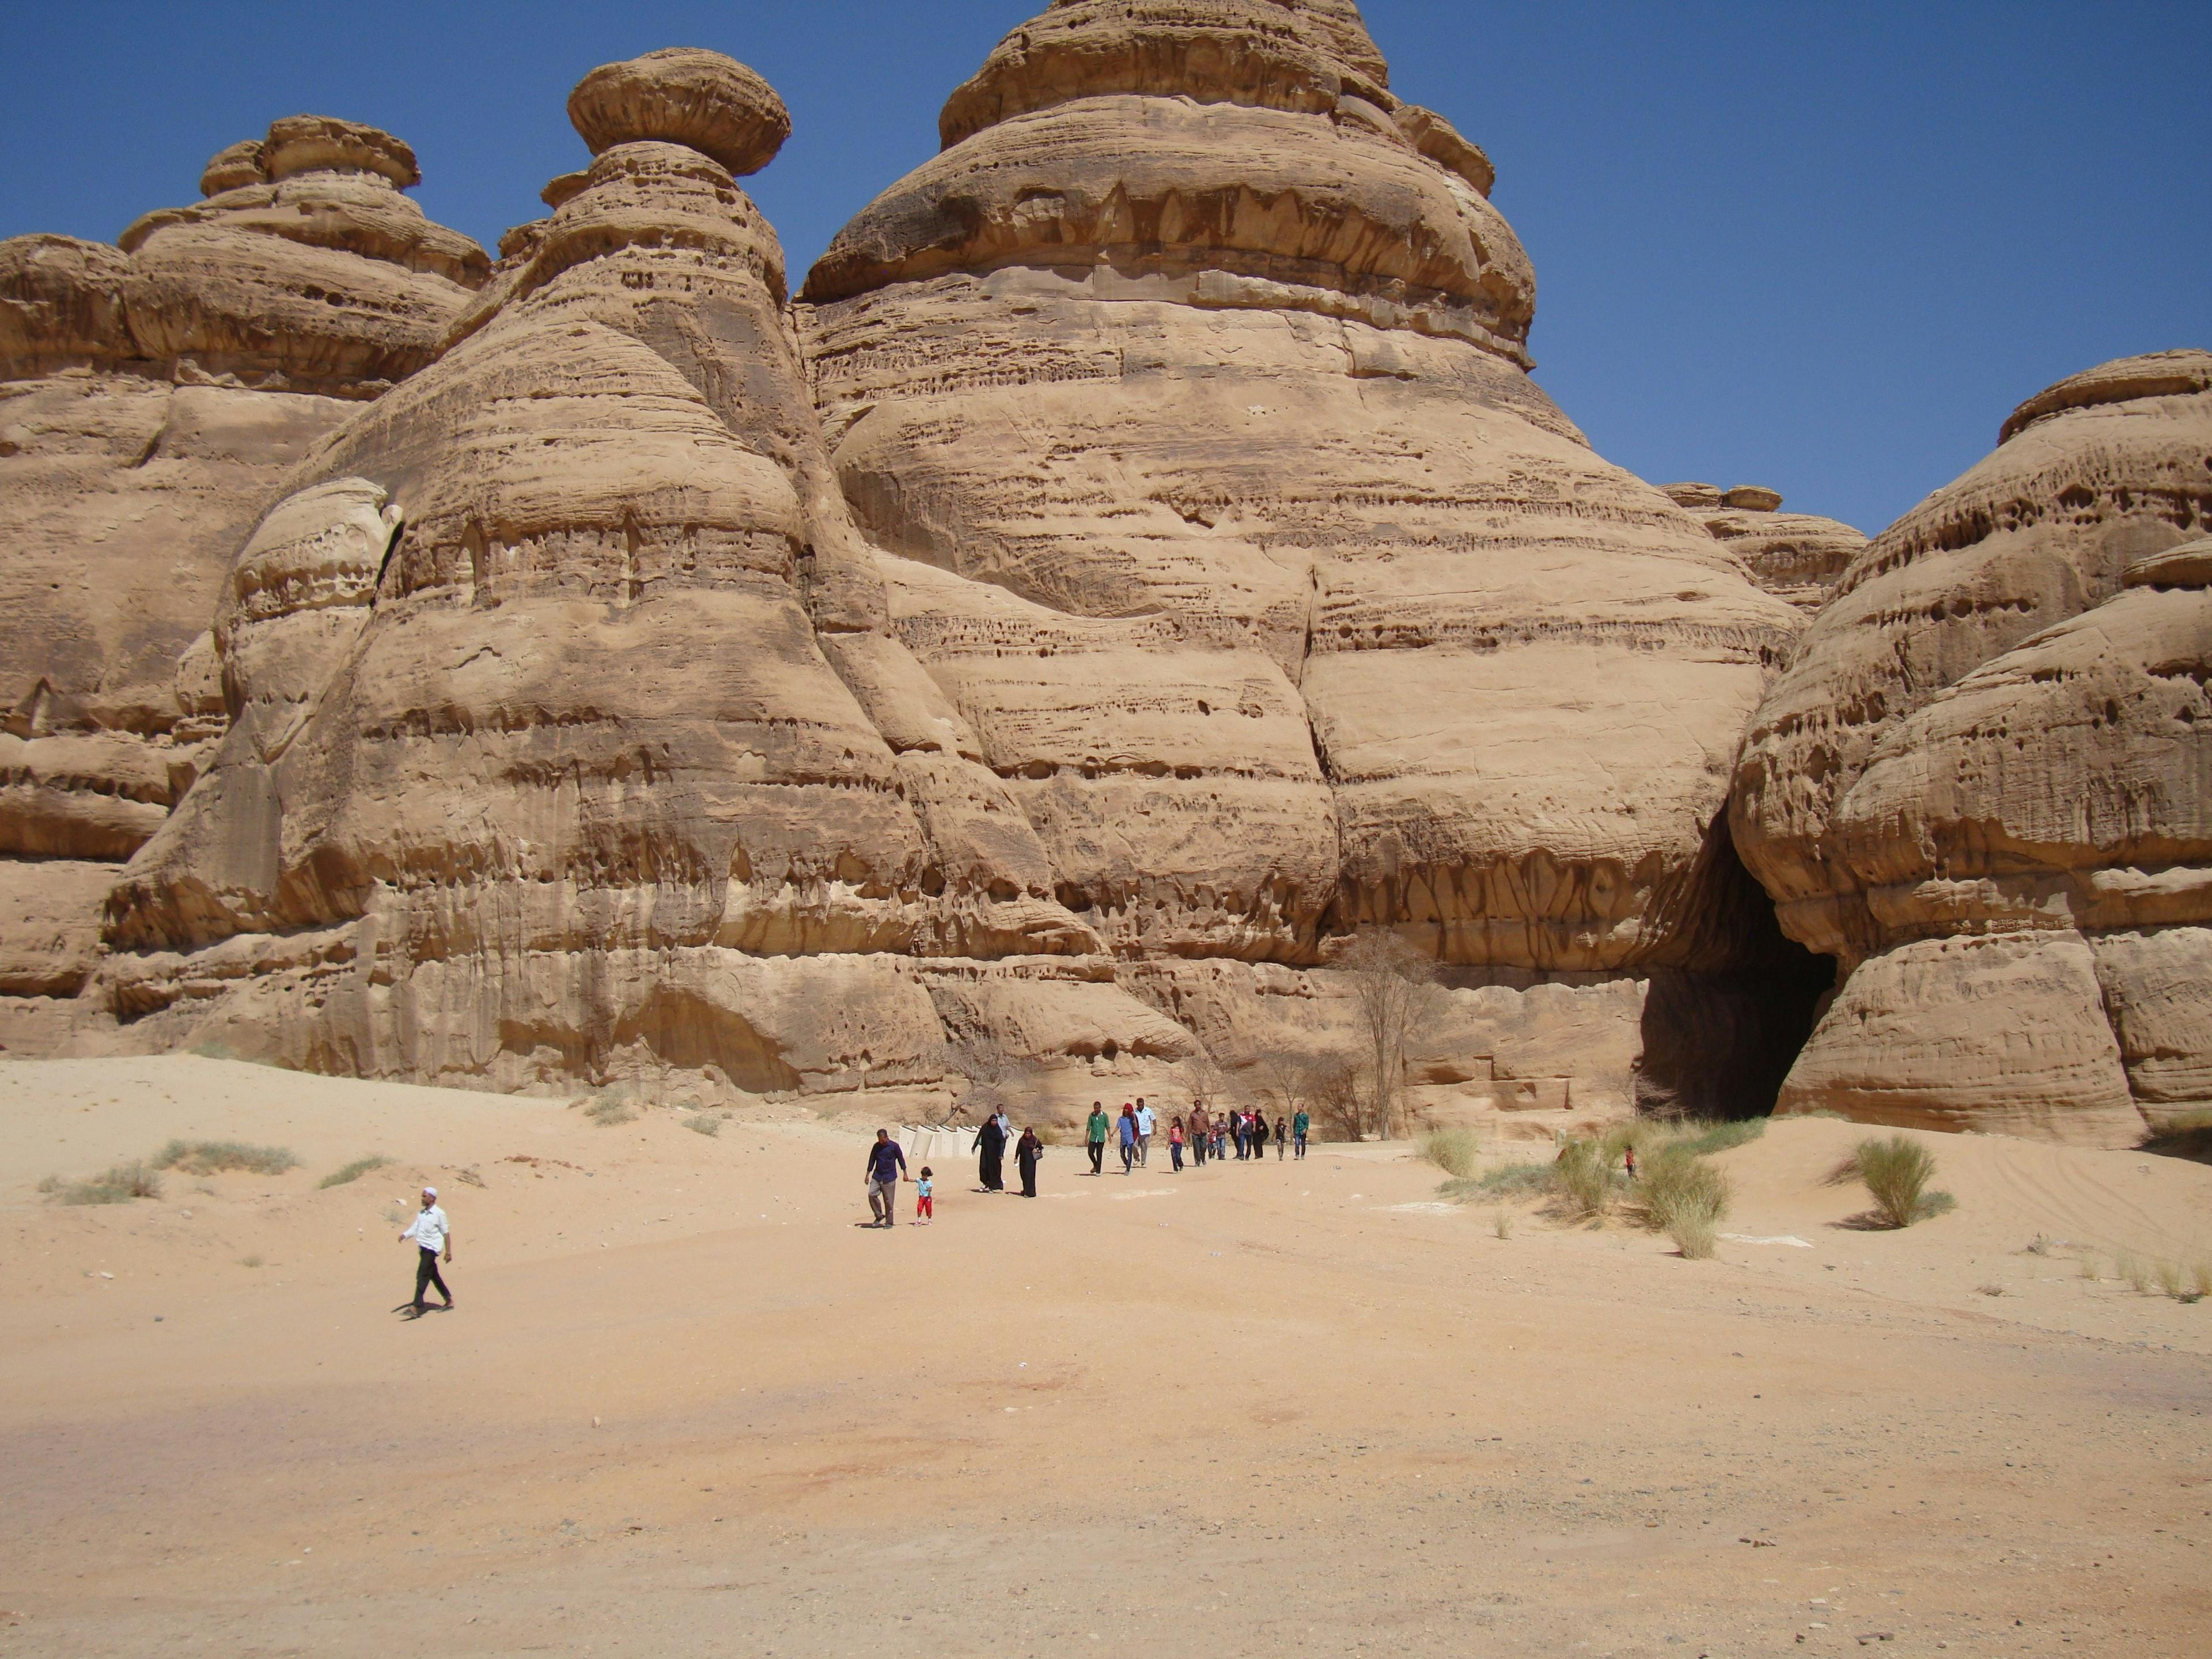 Hegra historical site in Al-Ula desert.